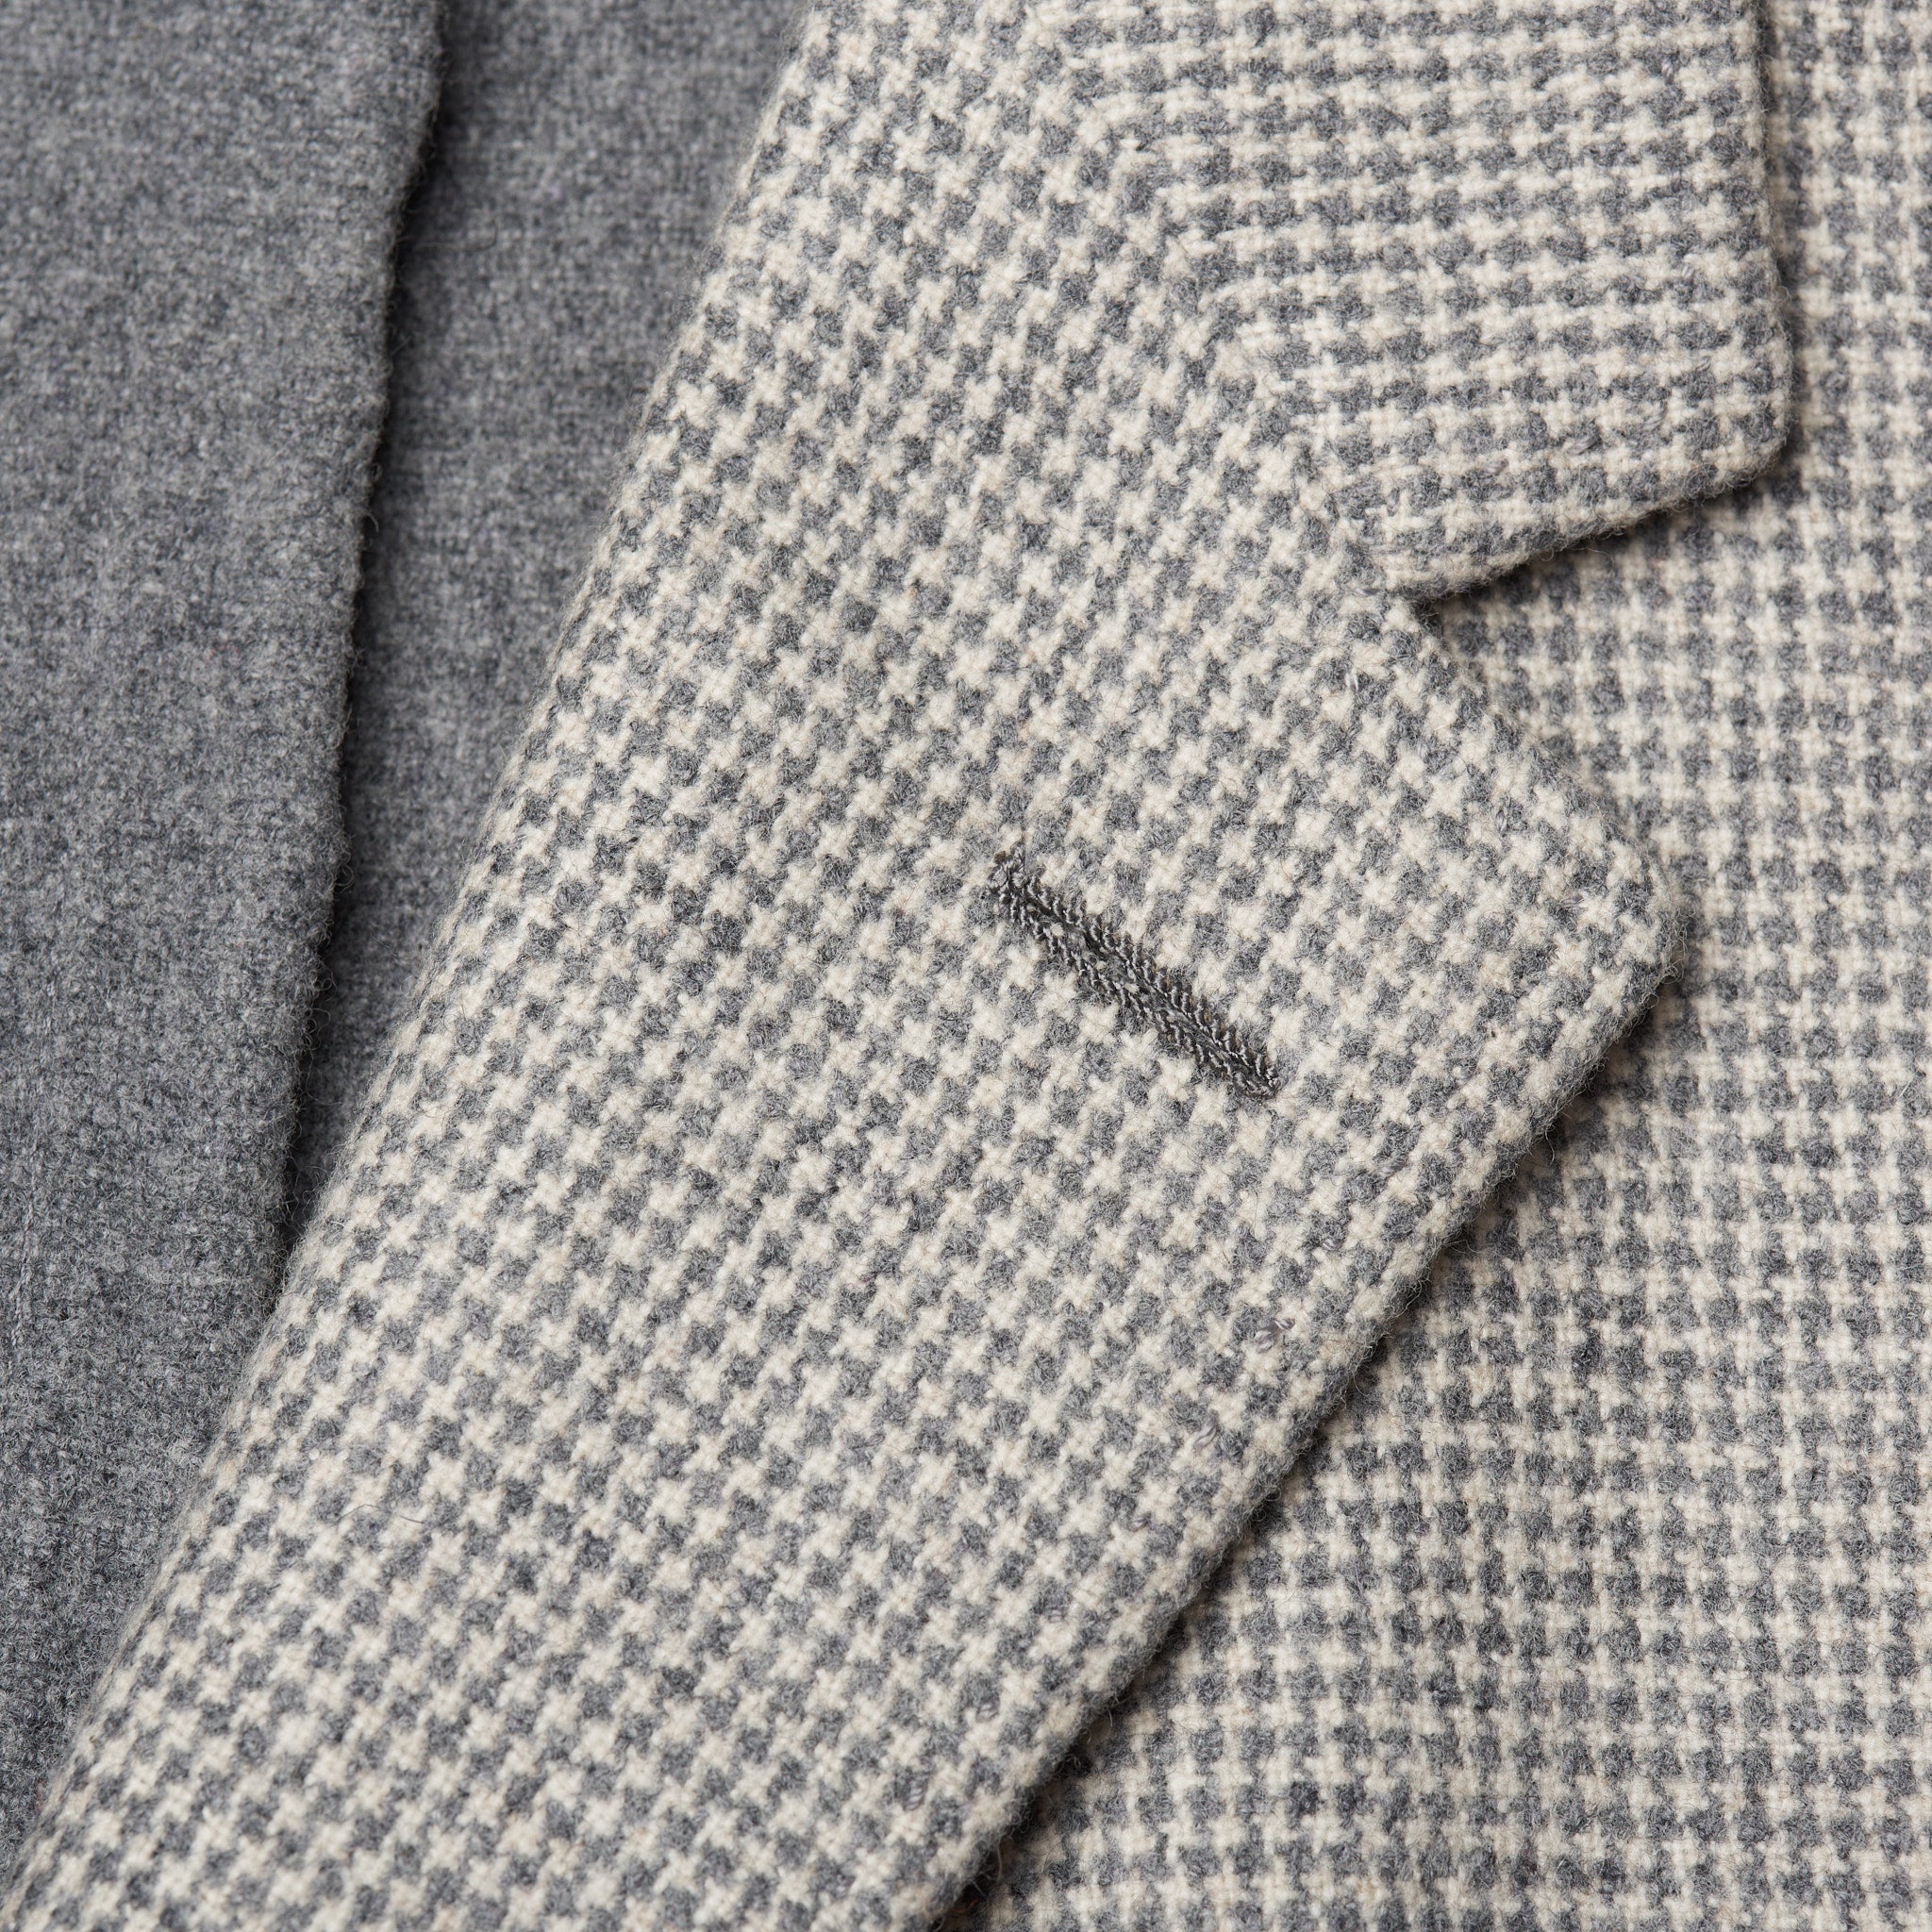 D'AVENZA Handmade Gray Houndstooth Wool-Cashmere Coat EU 50 NEW US 40 D'AVENZA